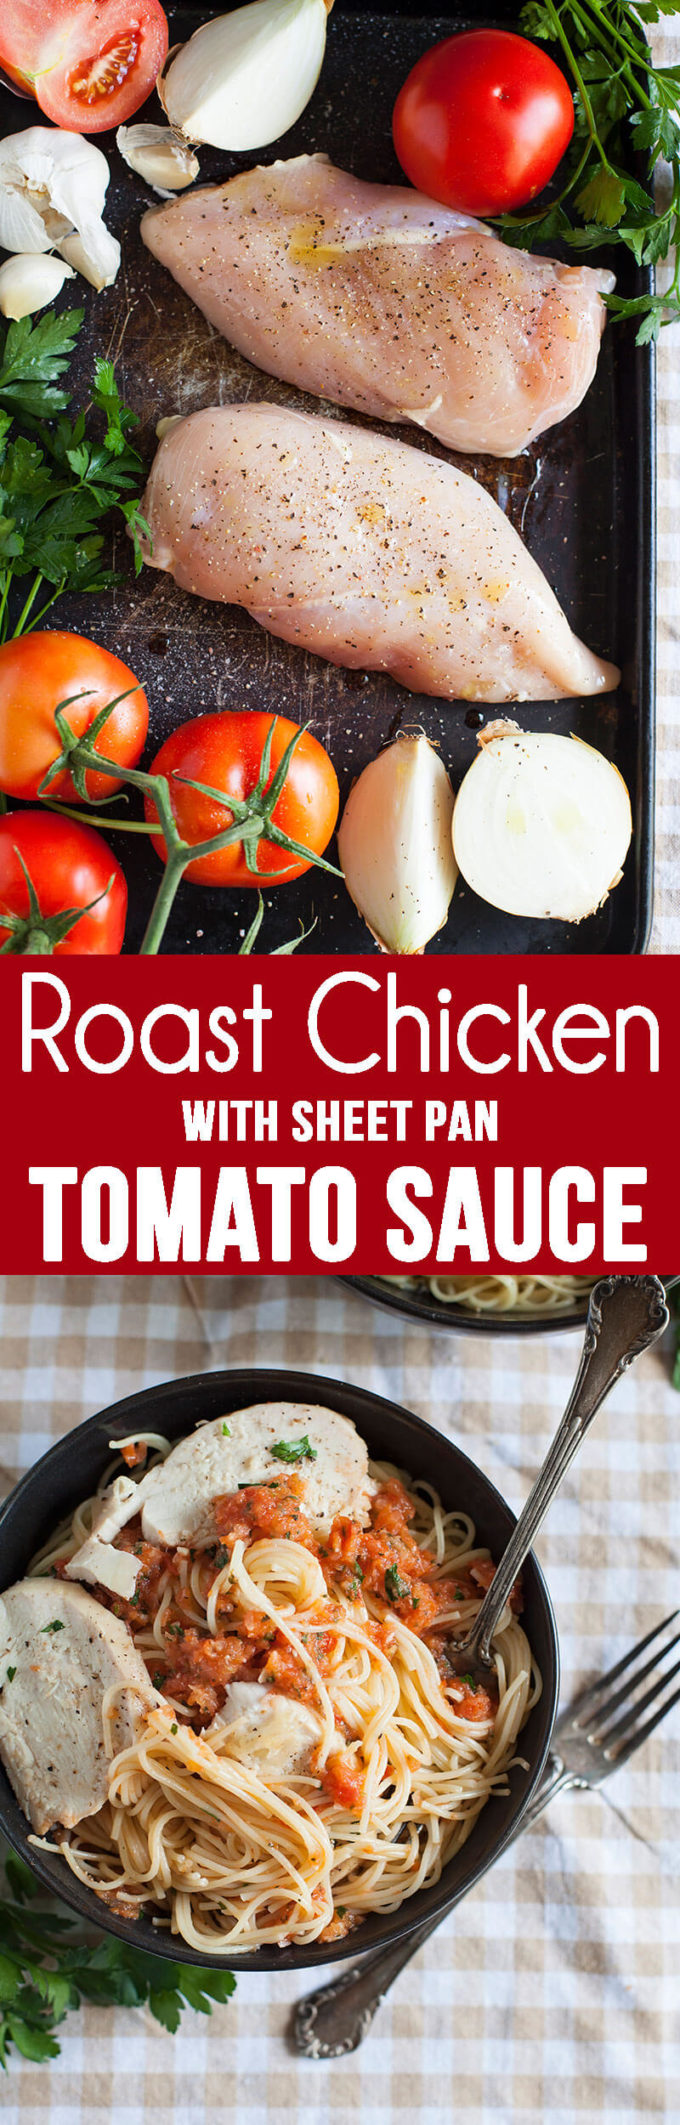 Roast Chicken with Sheet Pan Tomato Sauce